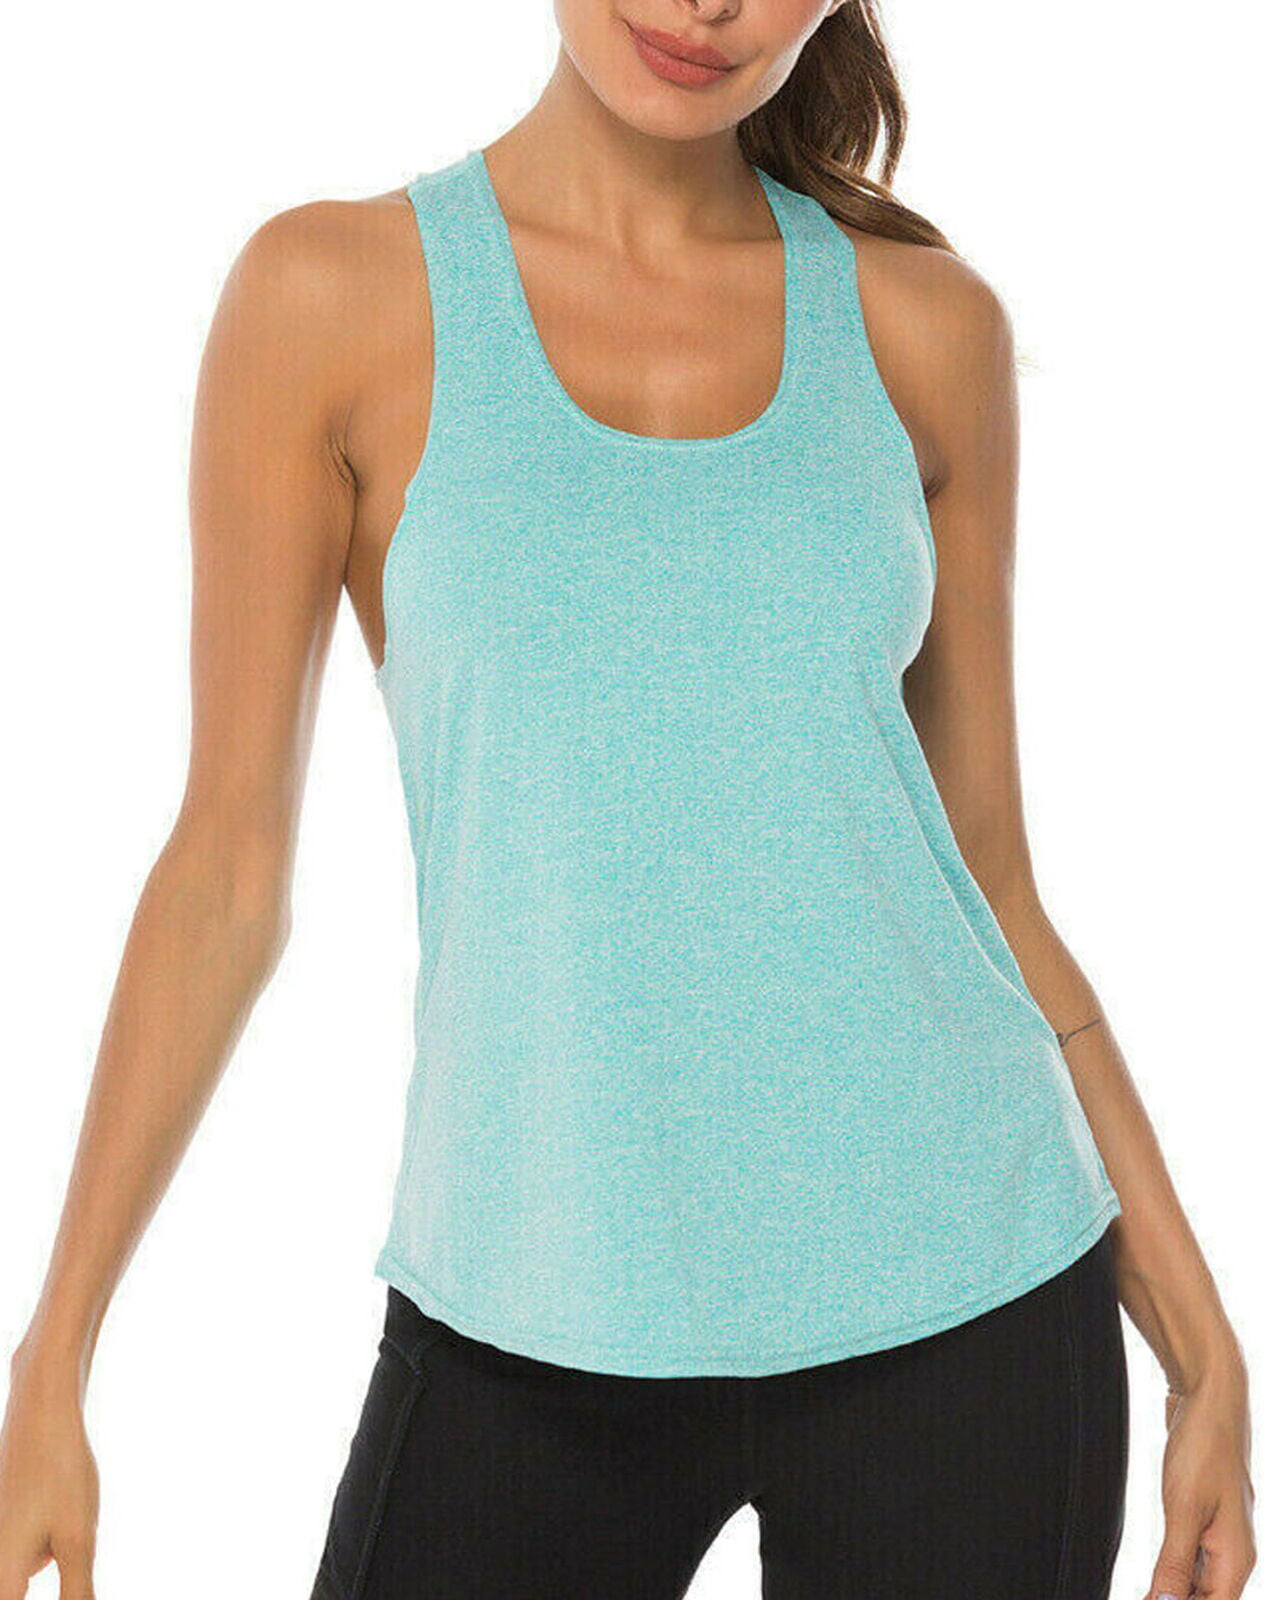 Women Workout Tank Top T-shirt Sport Gym Clothes Fitness Yoga Tank Tops Shirt 